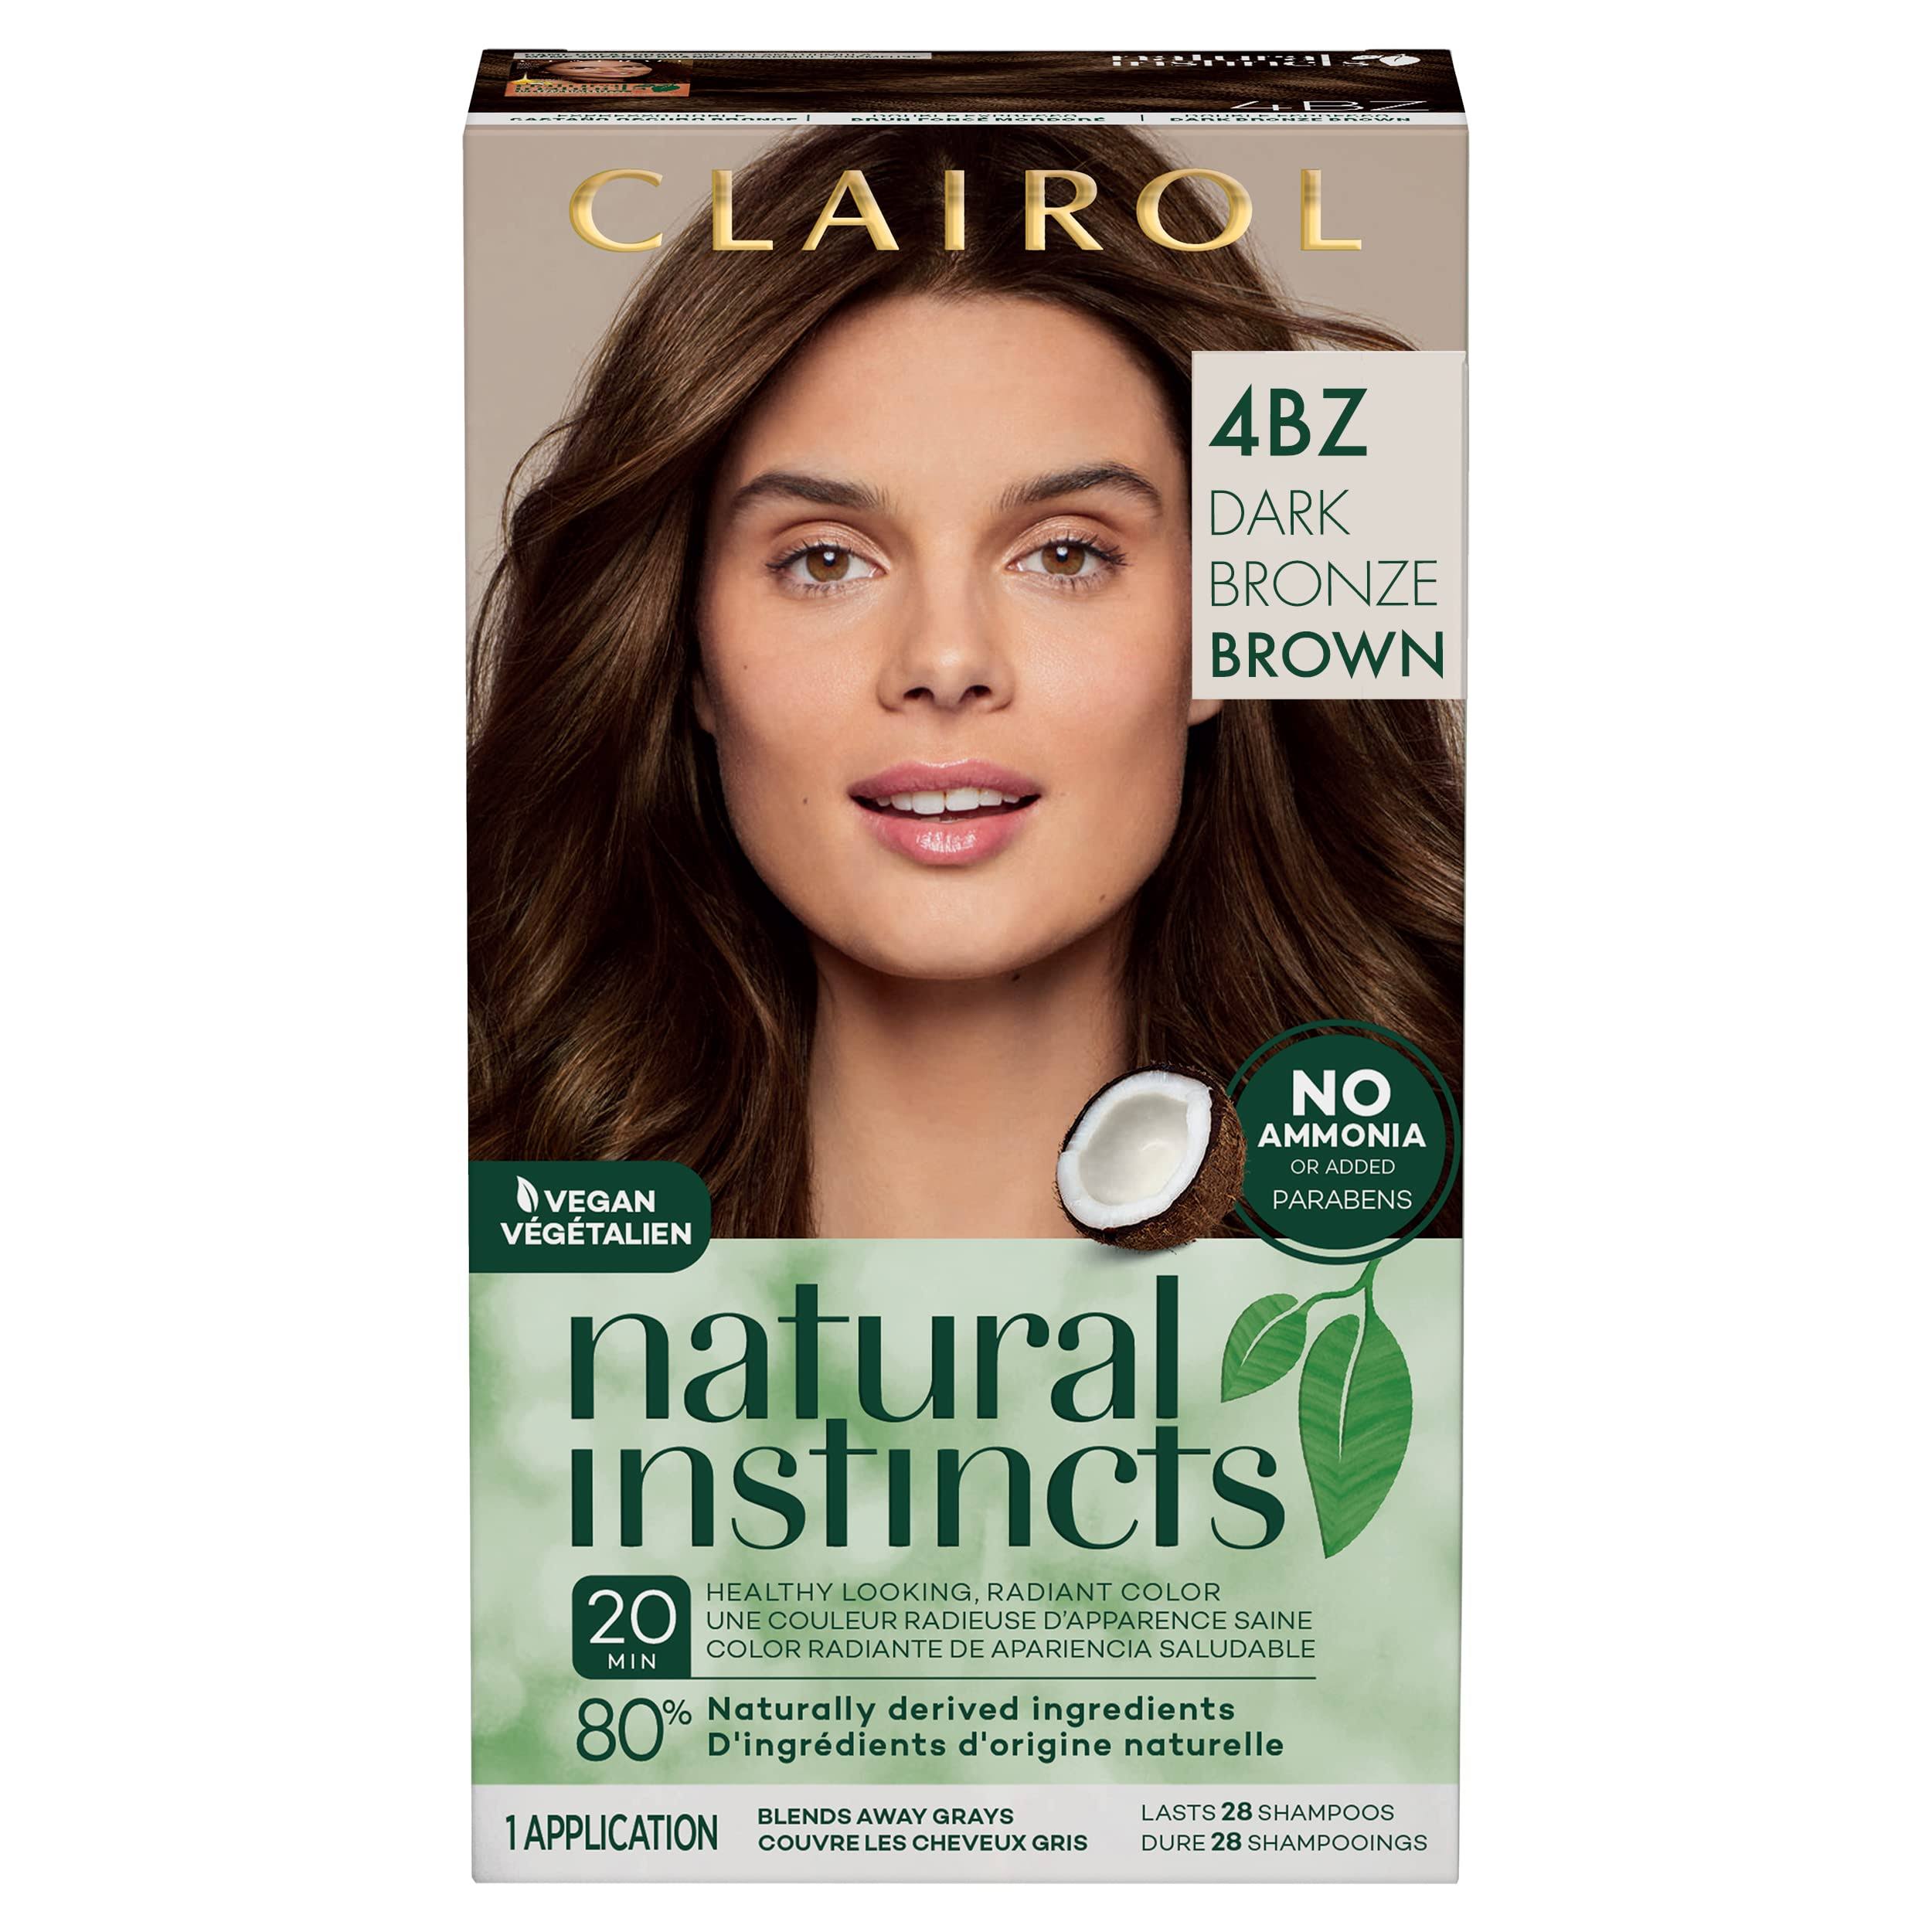 Clairol Natural Instincts Semi-Permanent Hair Dye, 4BZ Dark Bronze Brown Hair Color, 1 Count